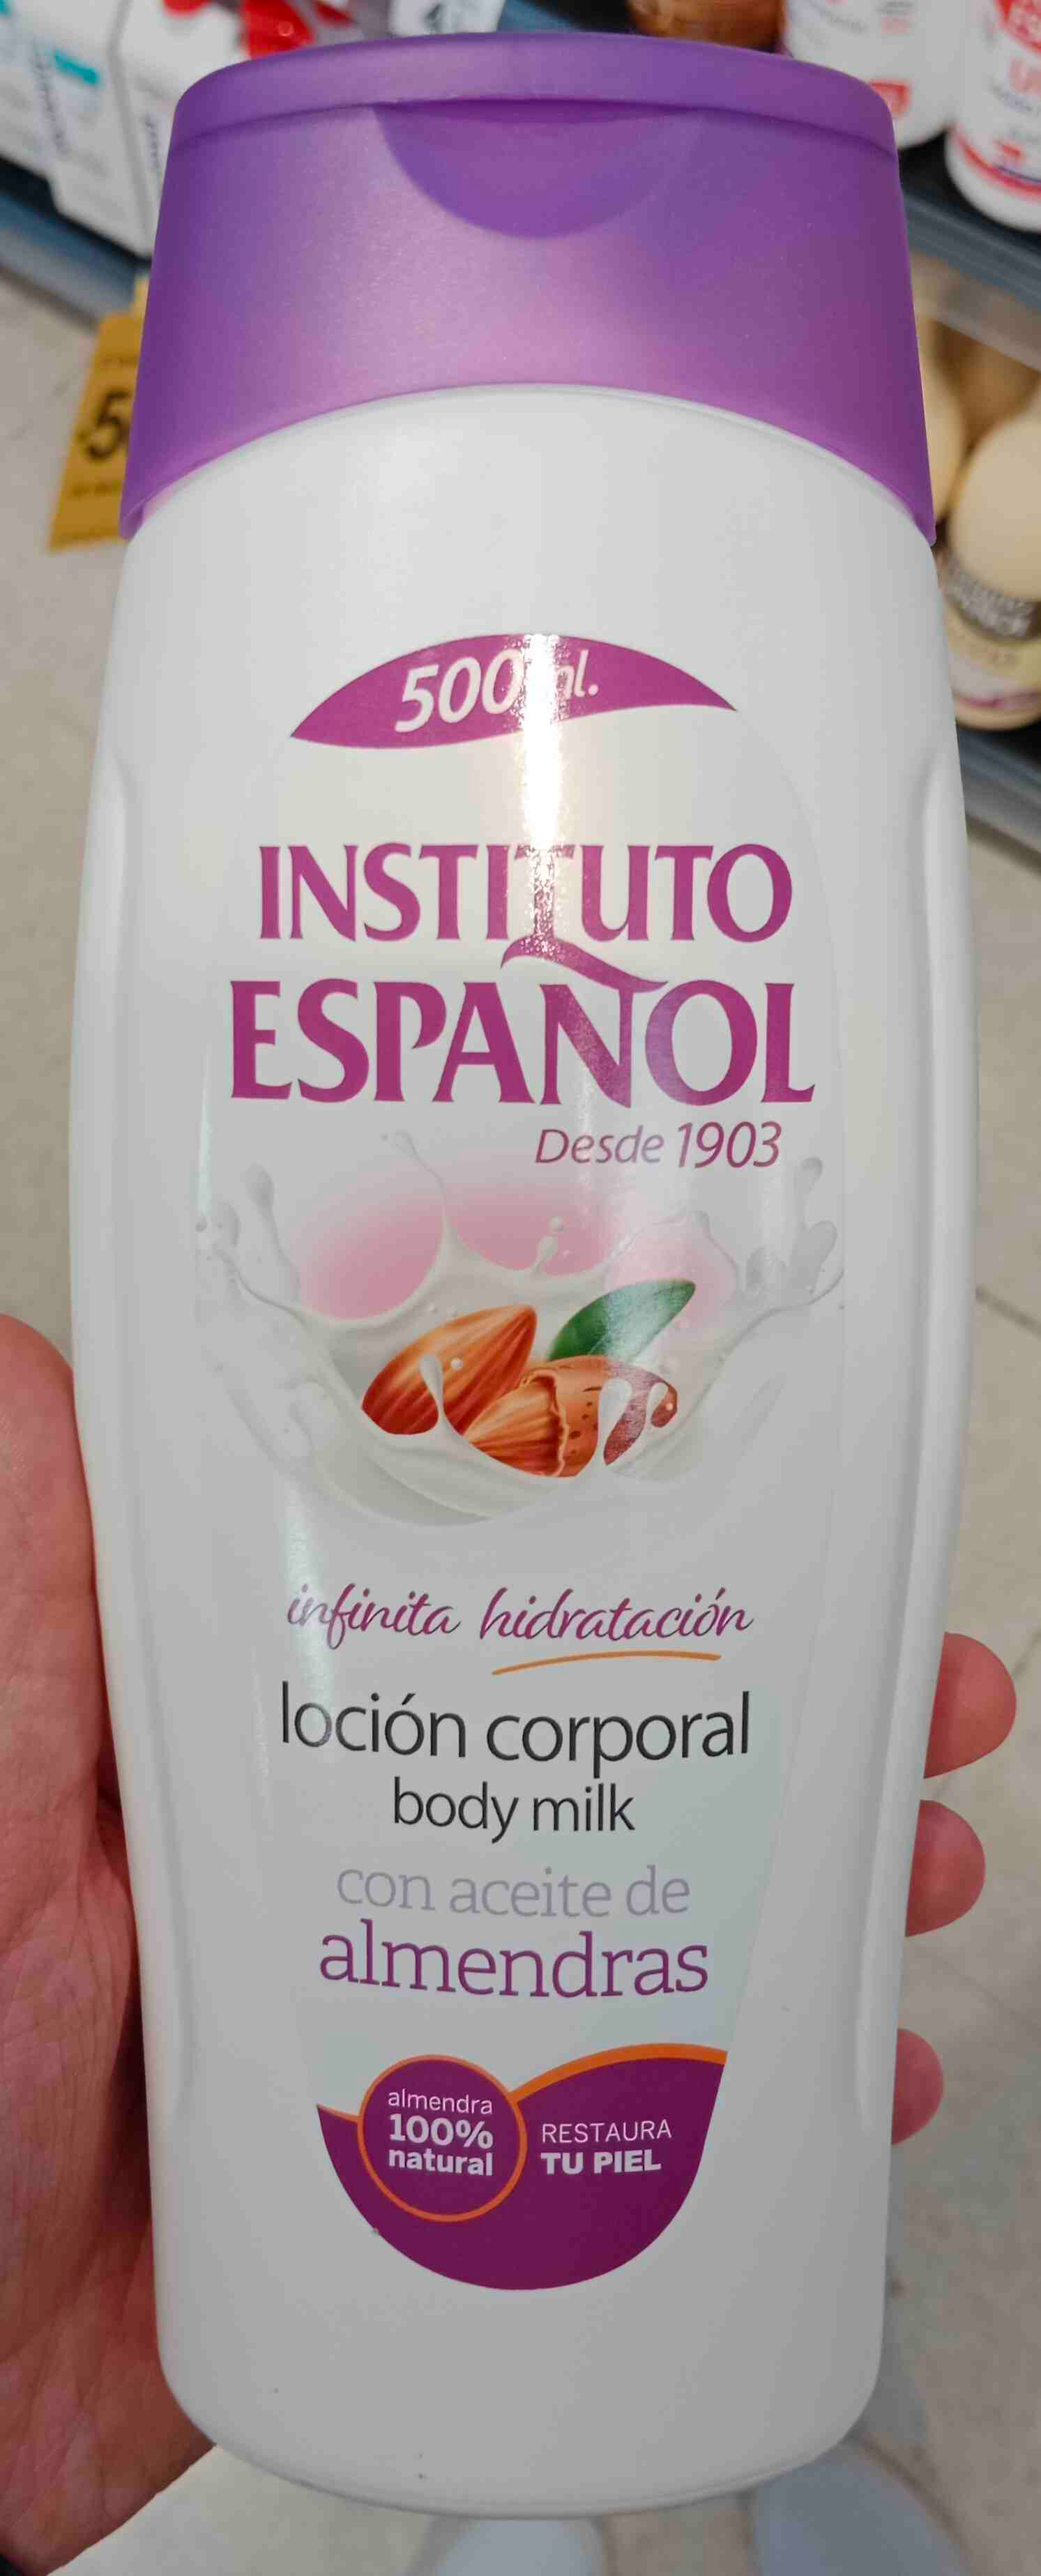 Instituto Espanol crema hidratante - Tuote - en